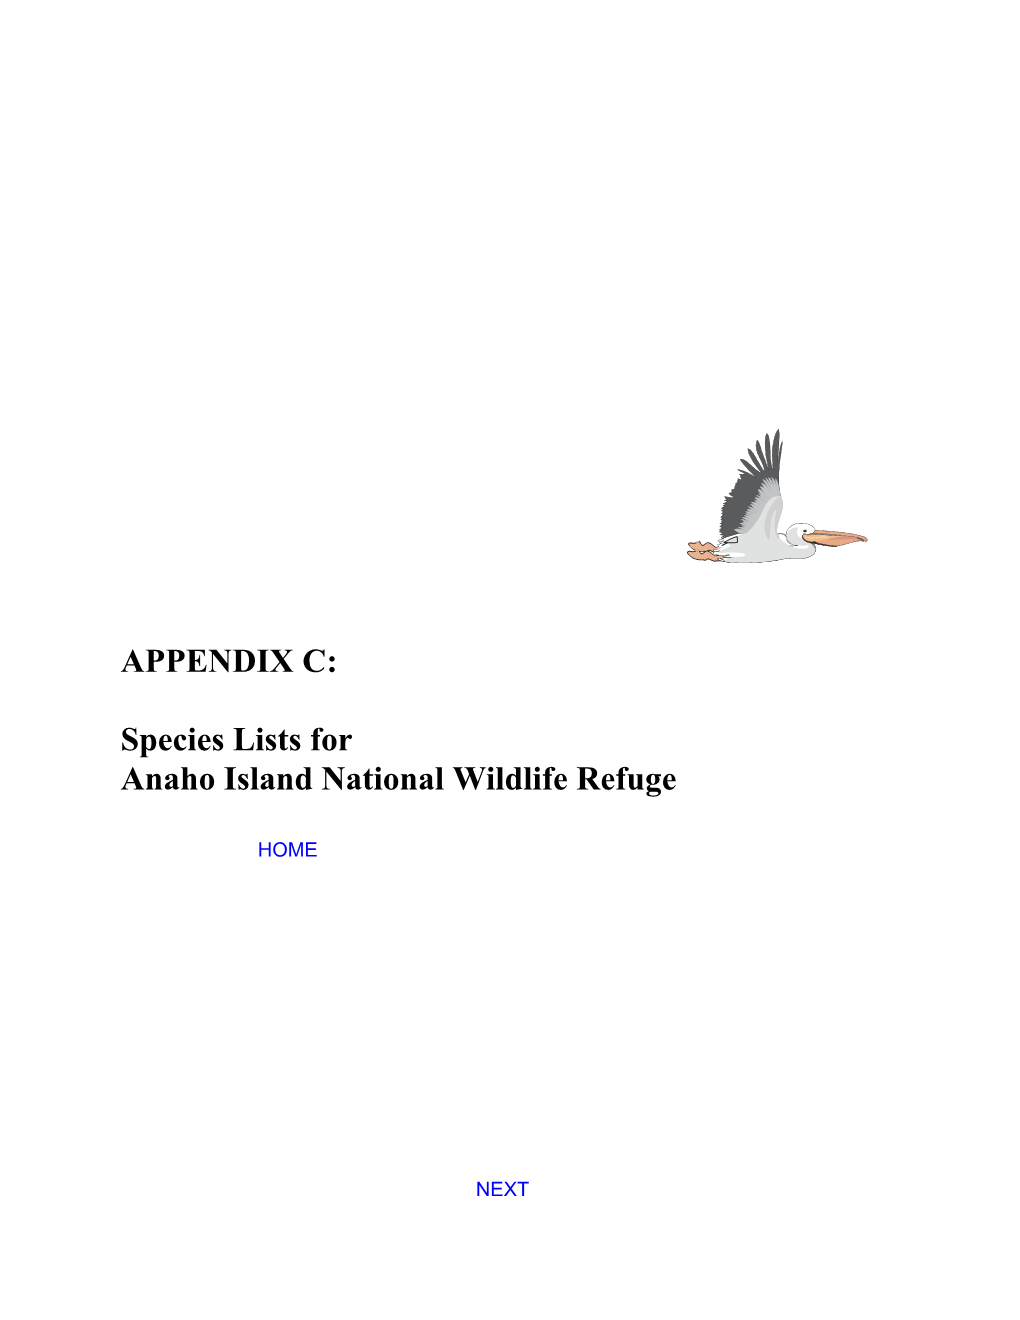 APPENDIX C: Species Lists for Anaho Island National Wildlife Refuge